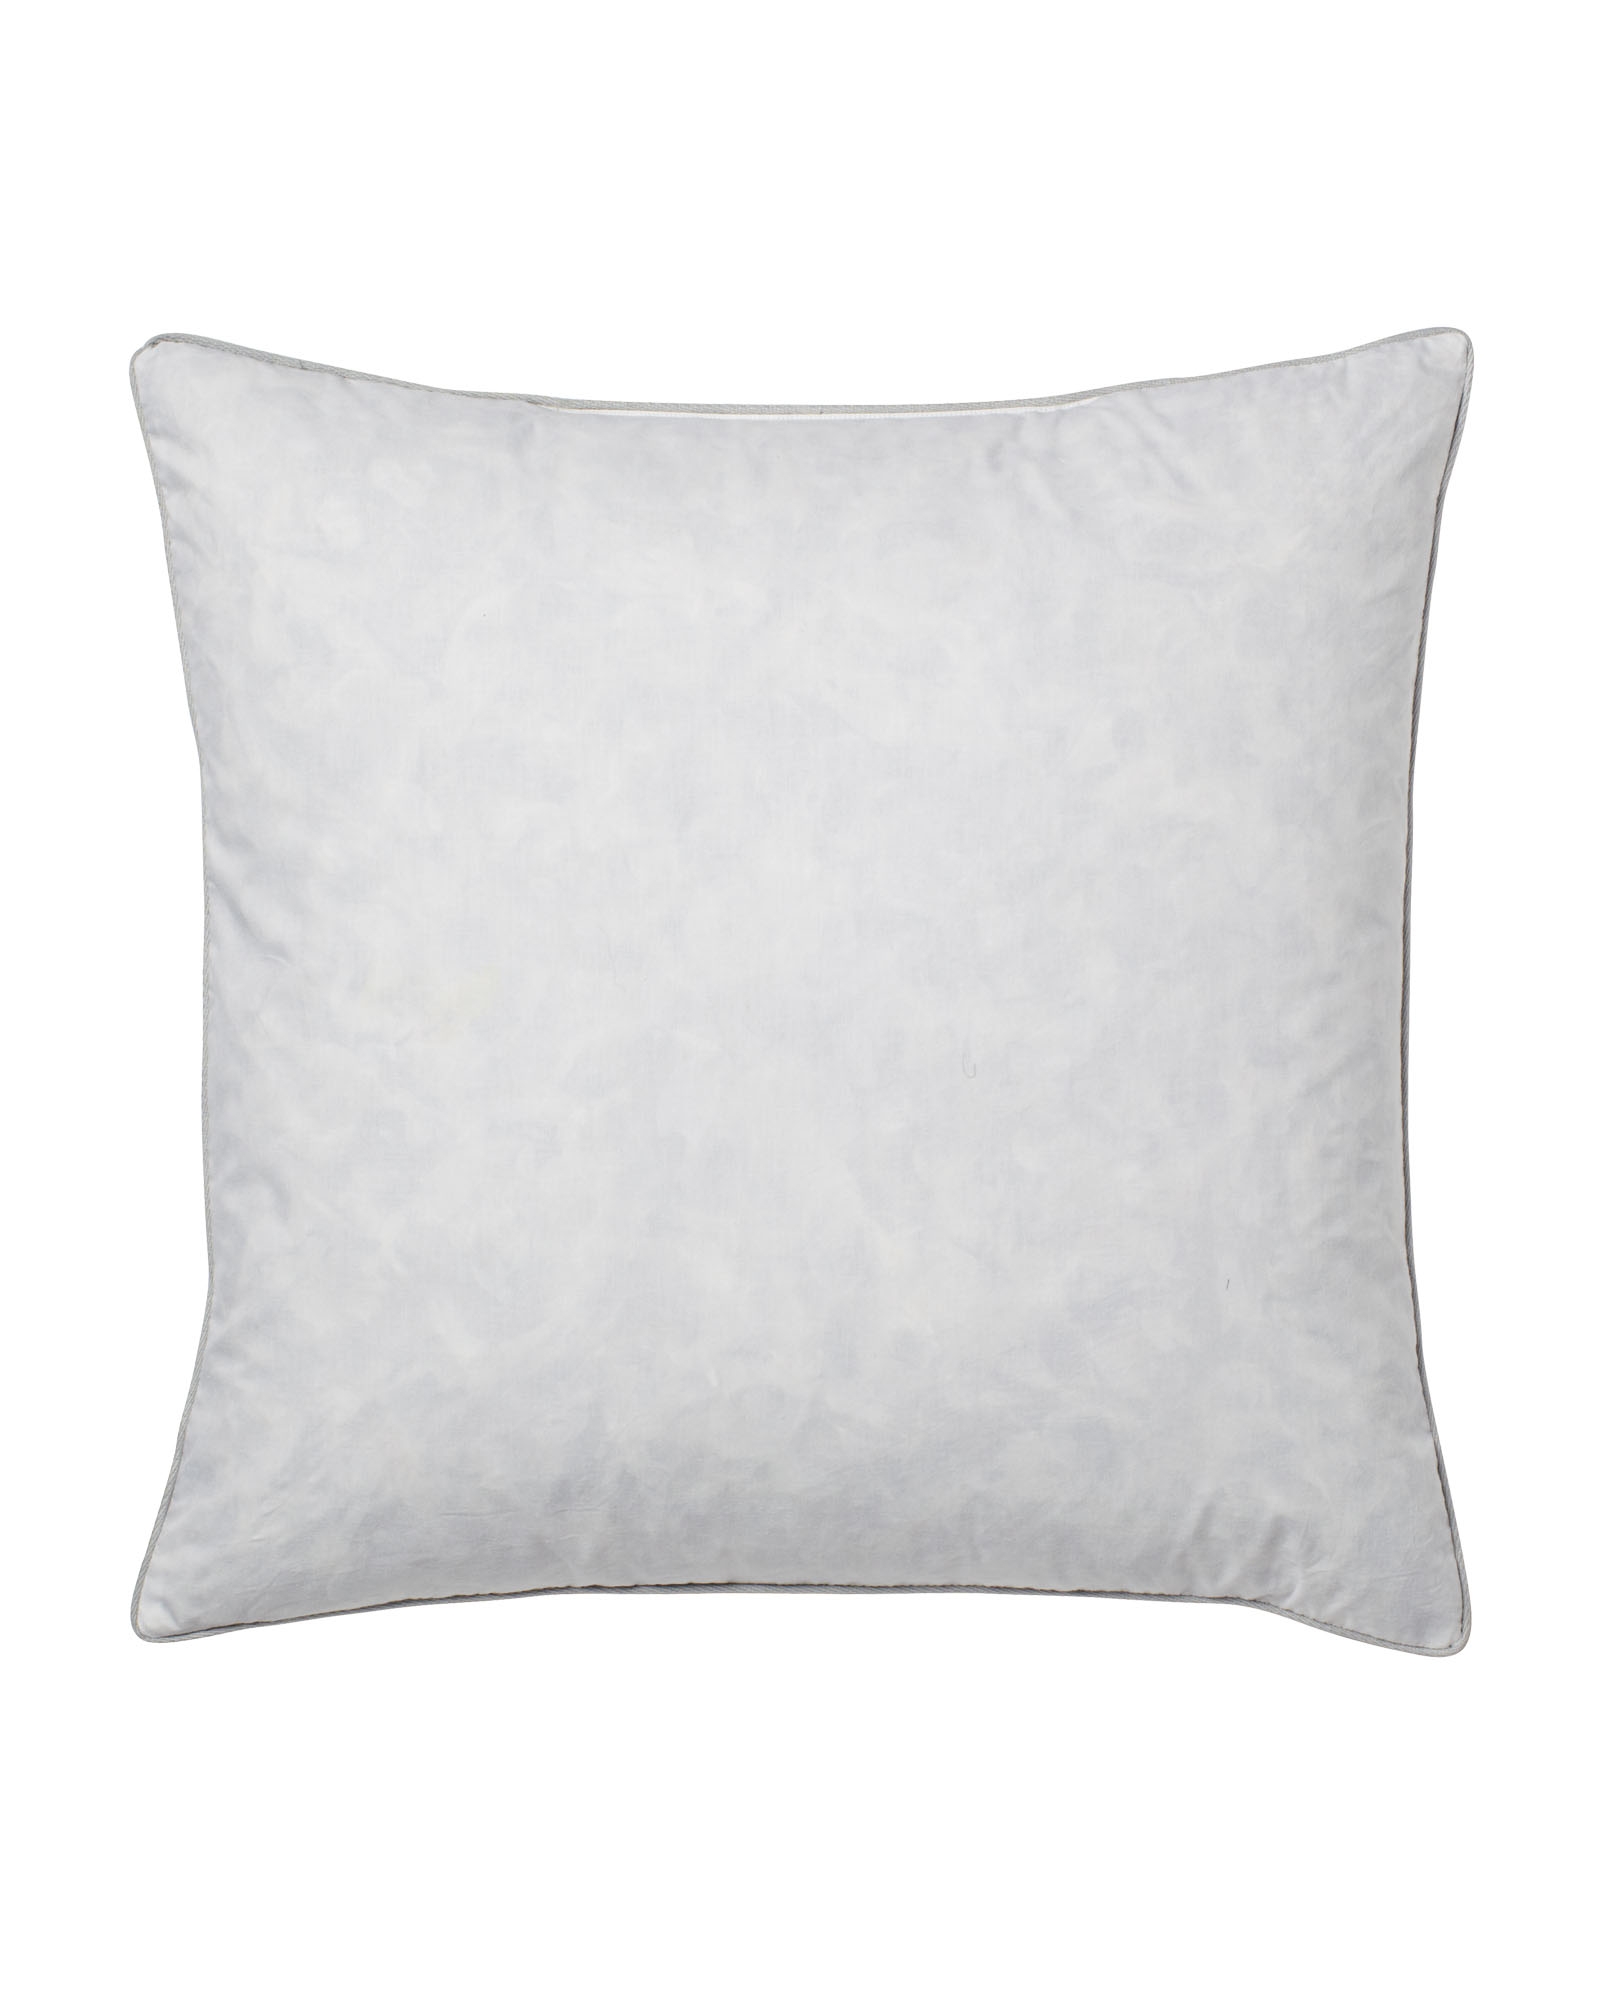 Pillow Insert - 20x20 - Image 0